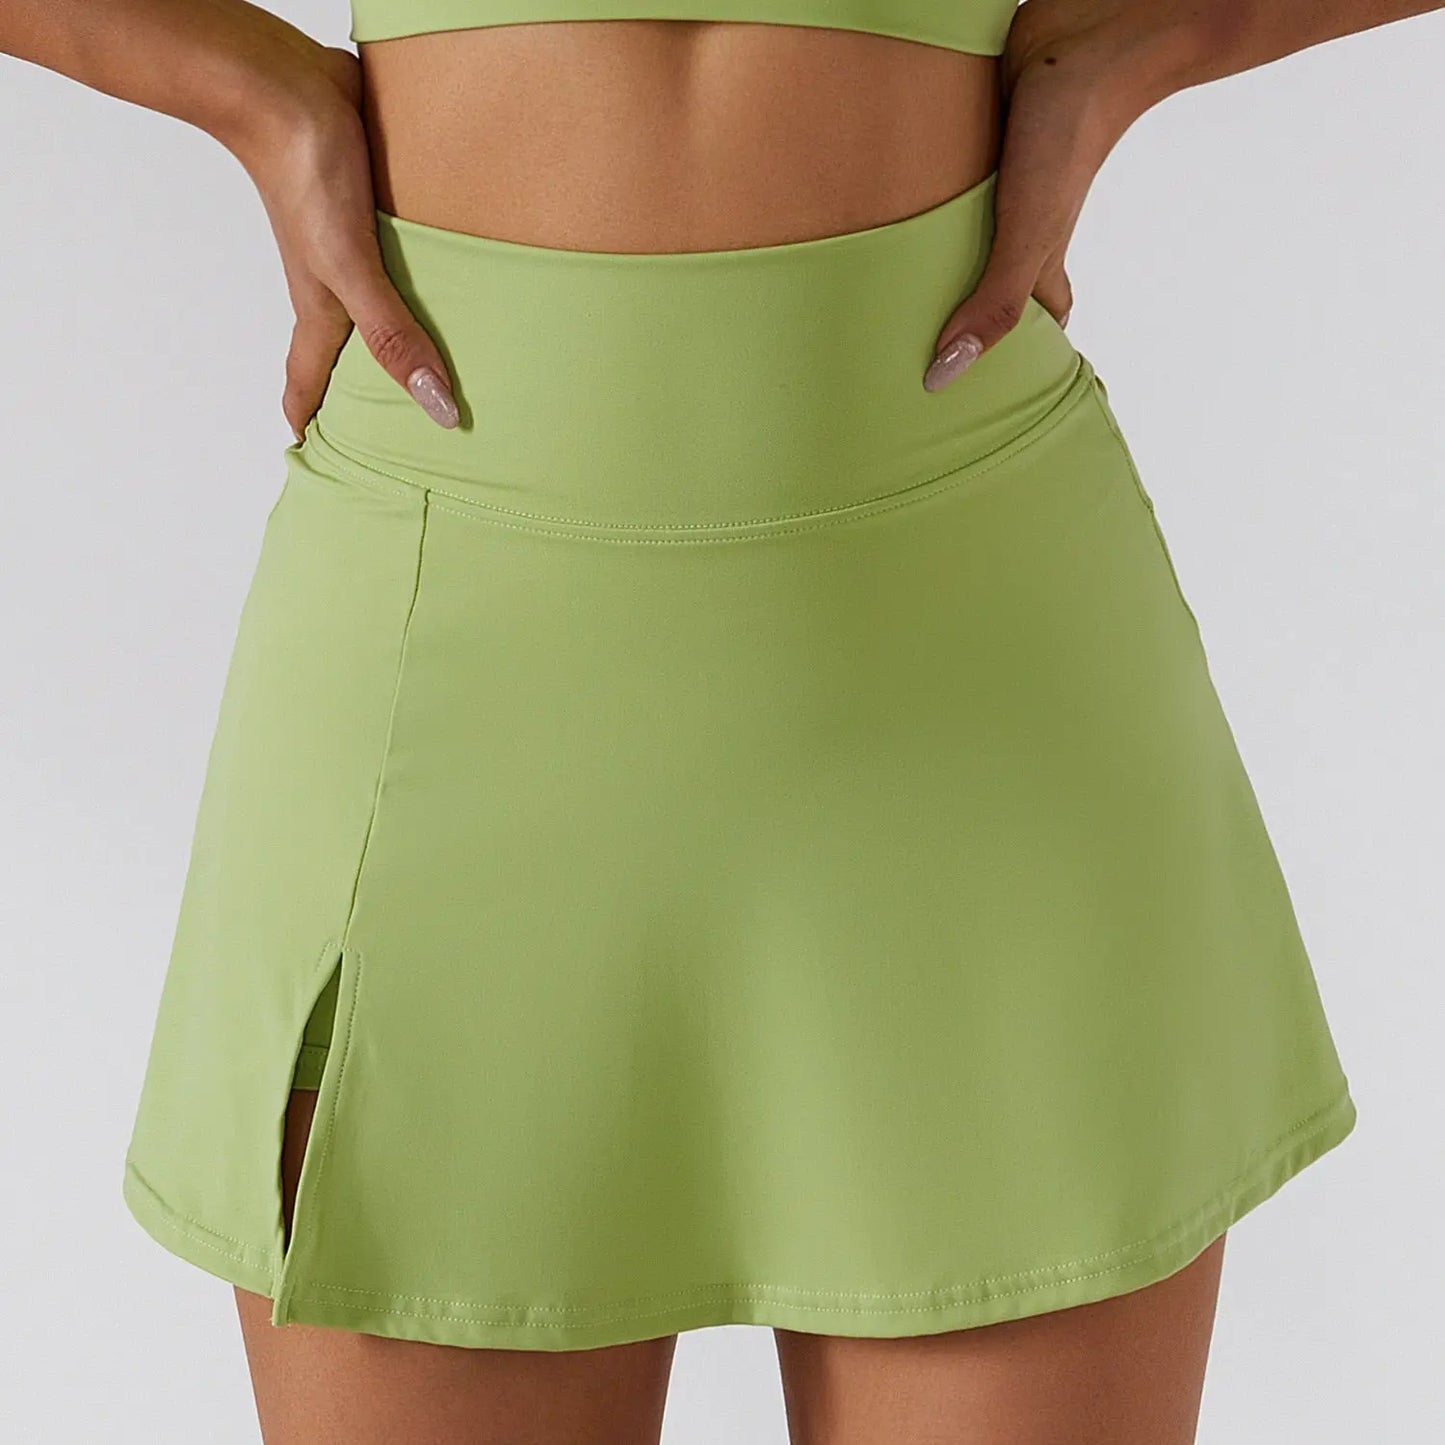 Carolina Yoga Top & Skirt Seperates